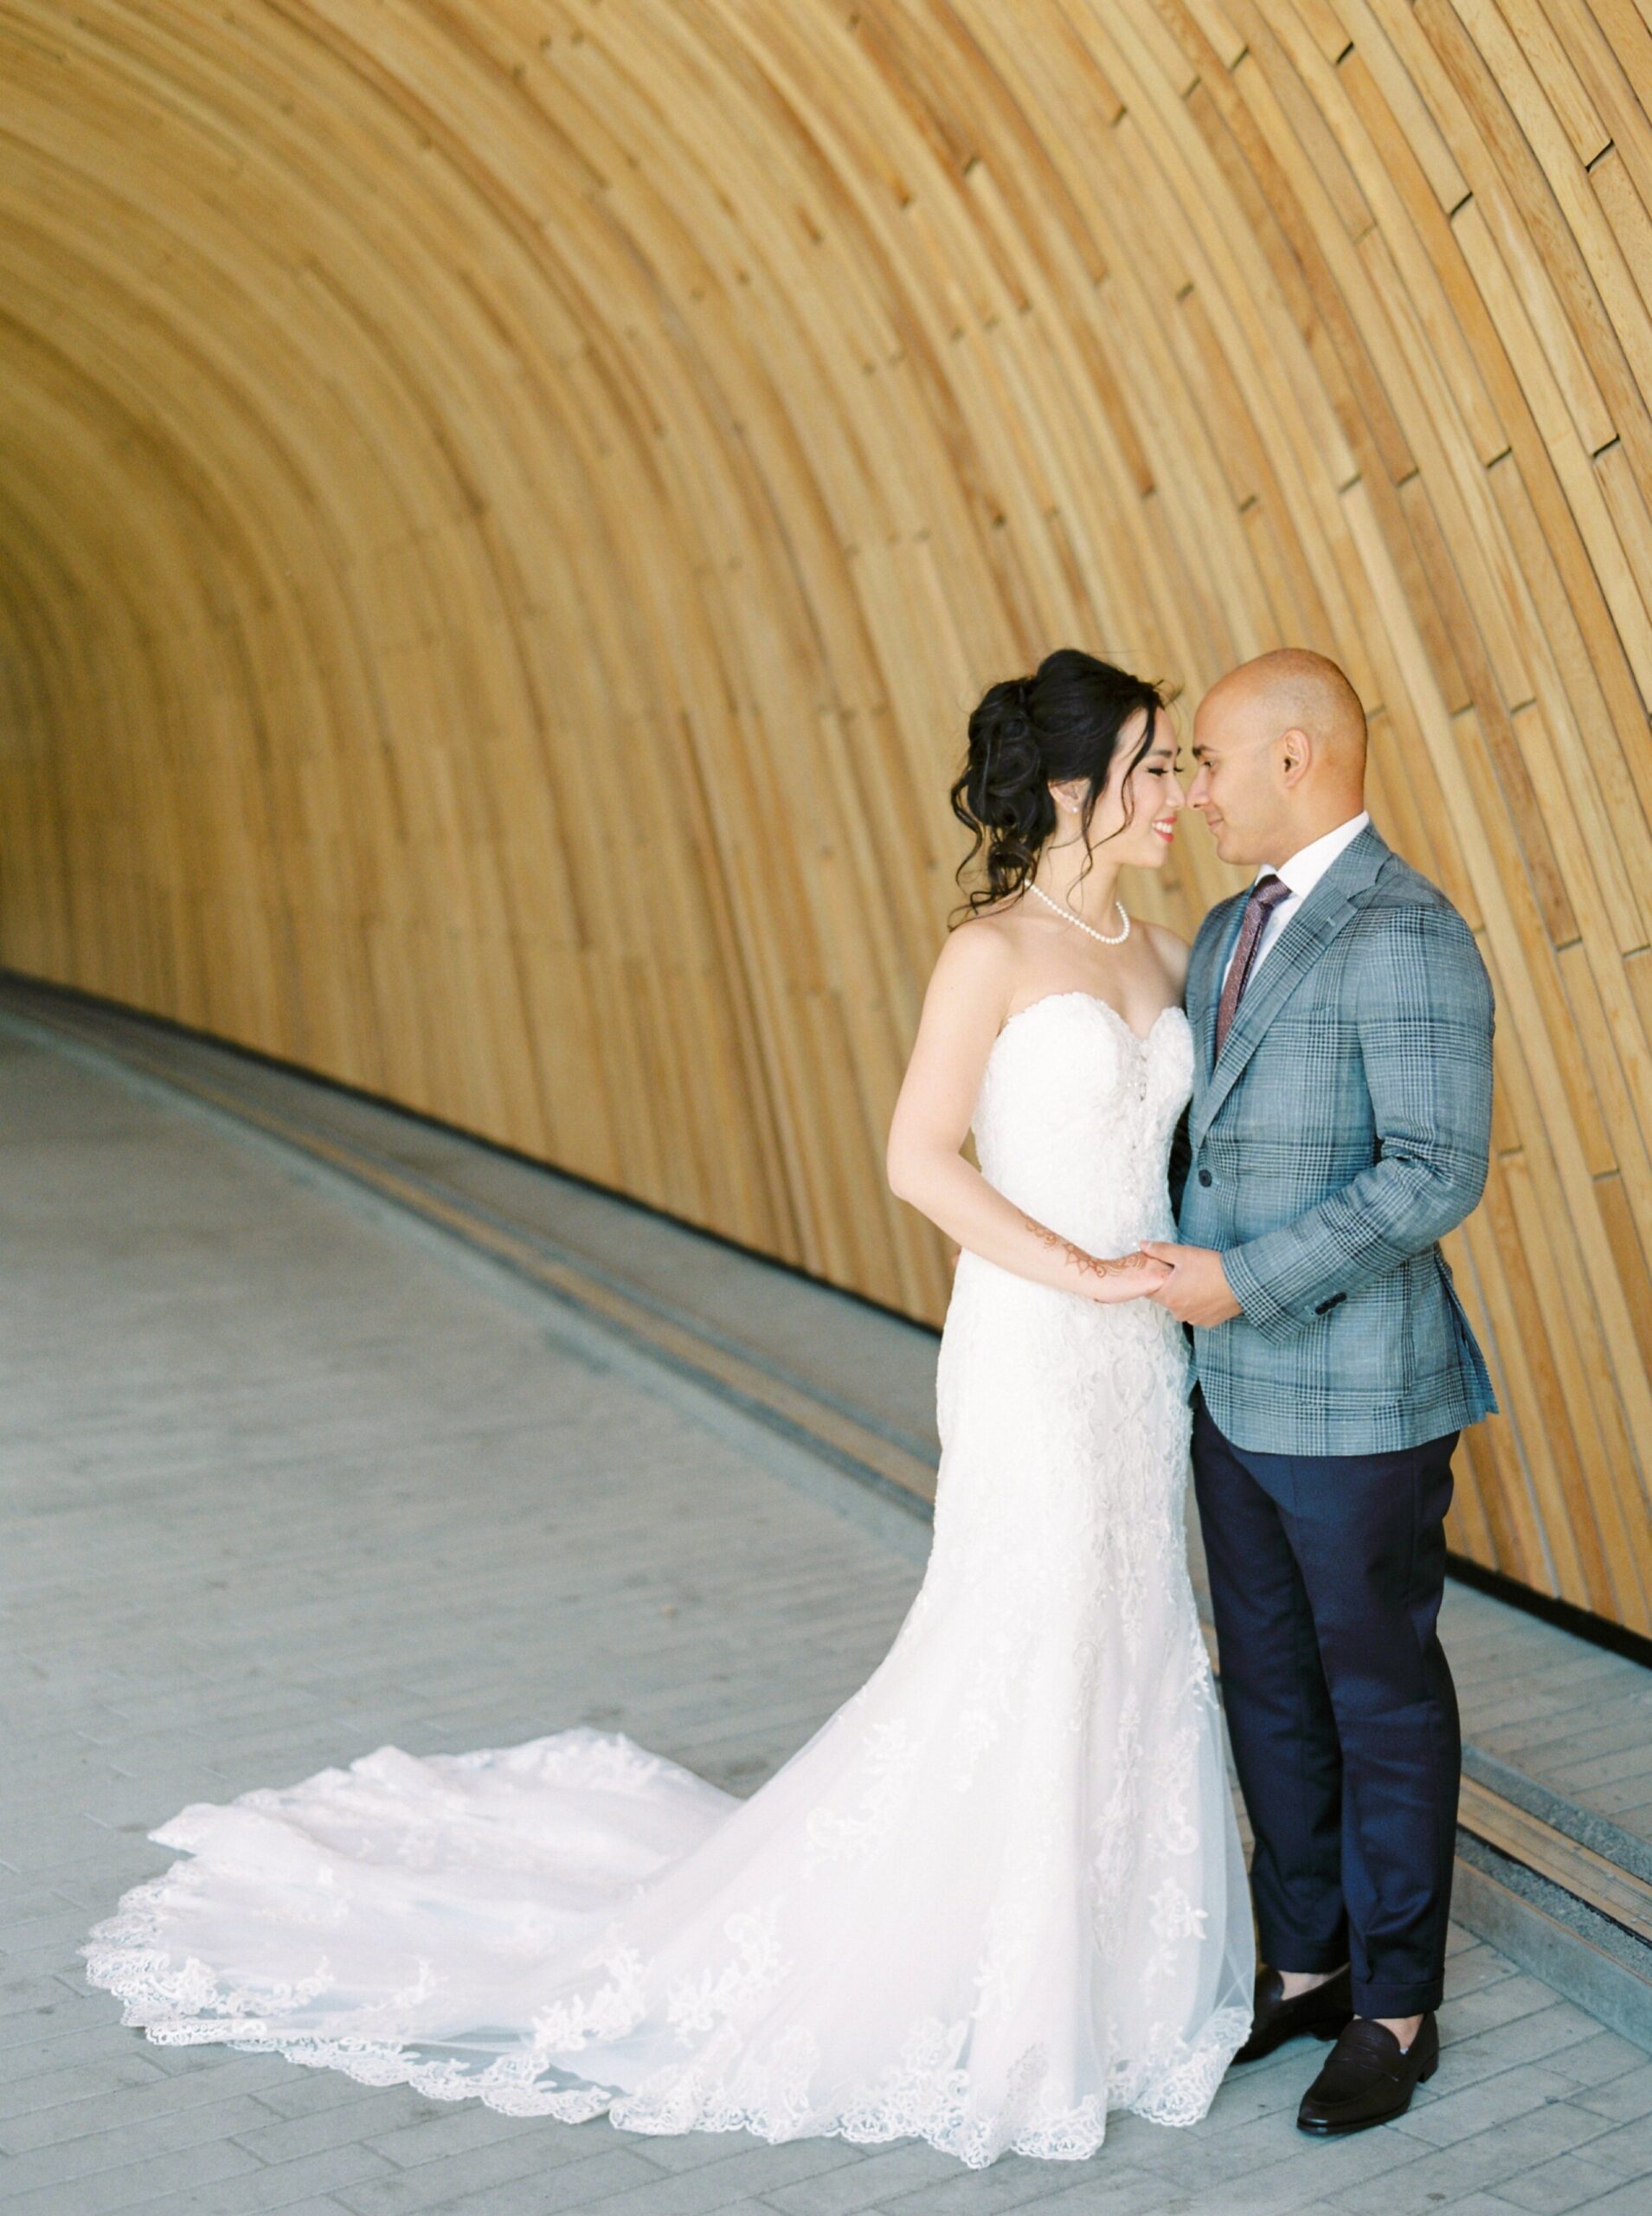  Couples pose ideas | calgary golf course wedding | calgary public library | Indian Chinese Fusion Wedding | Calgary wedding photographers 